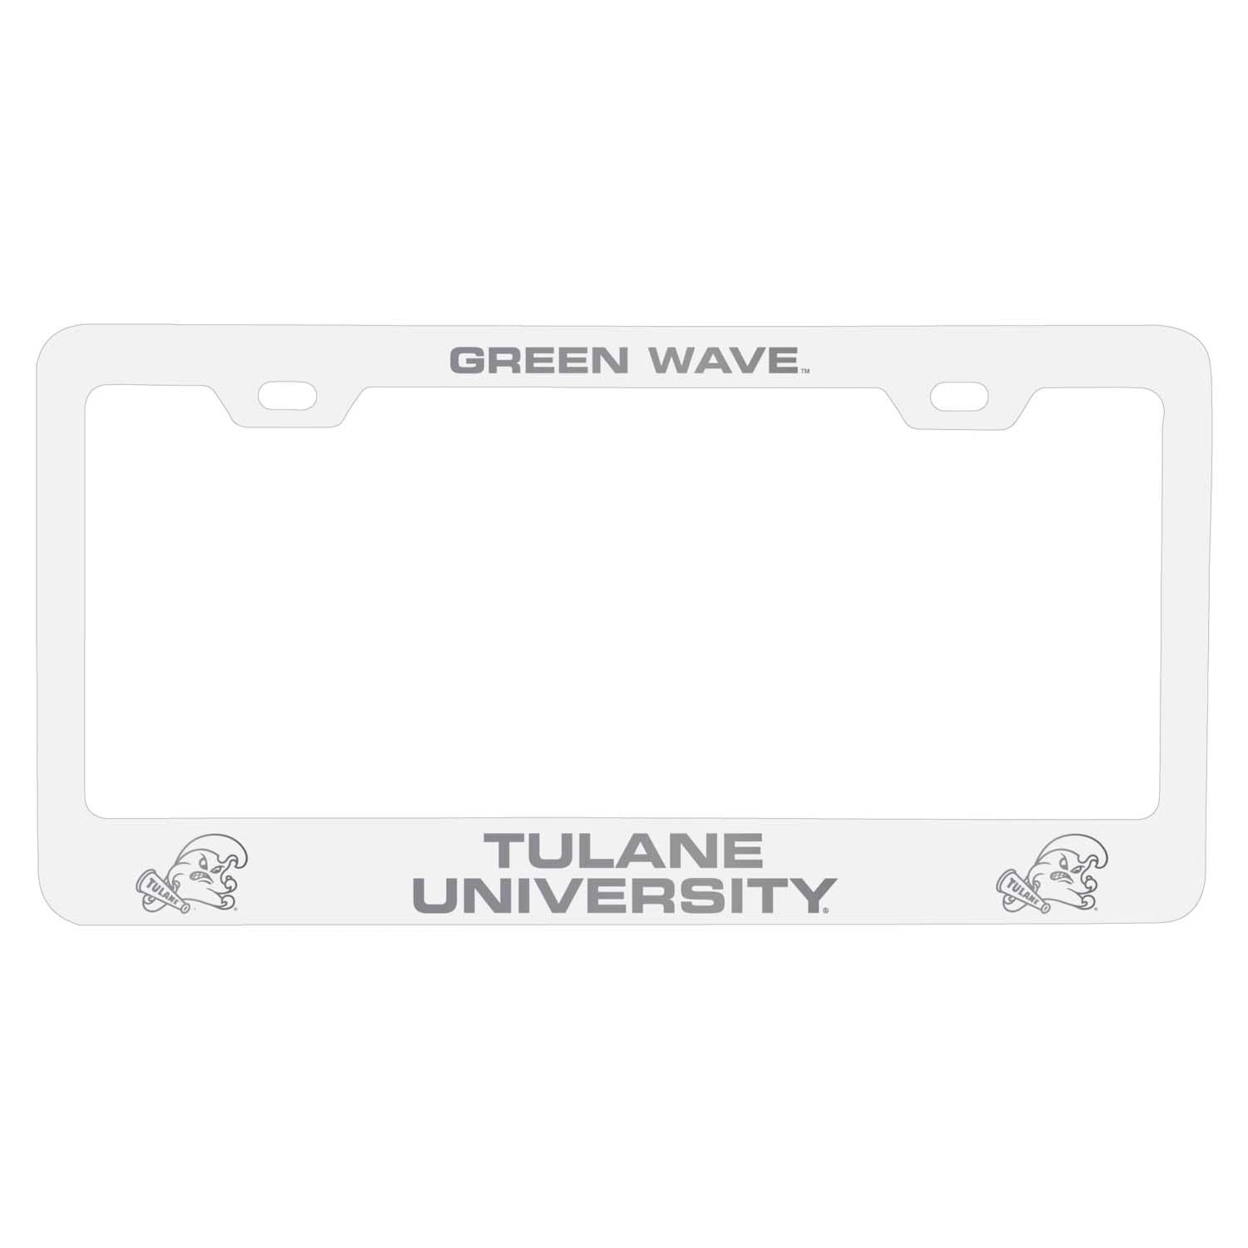 Tulane University Green Wave Laser Engraved Metal License Plate Frame - Choose Your Color - White